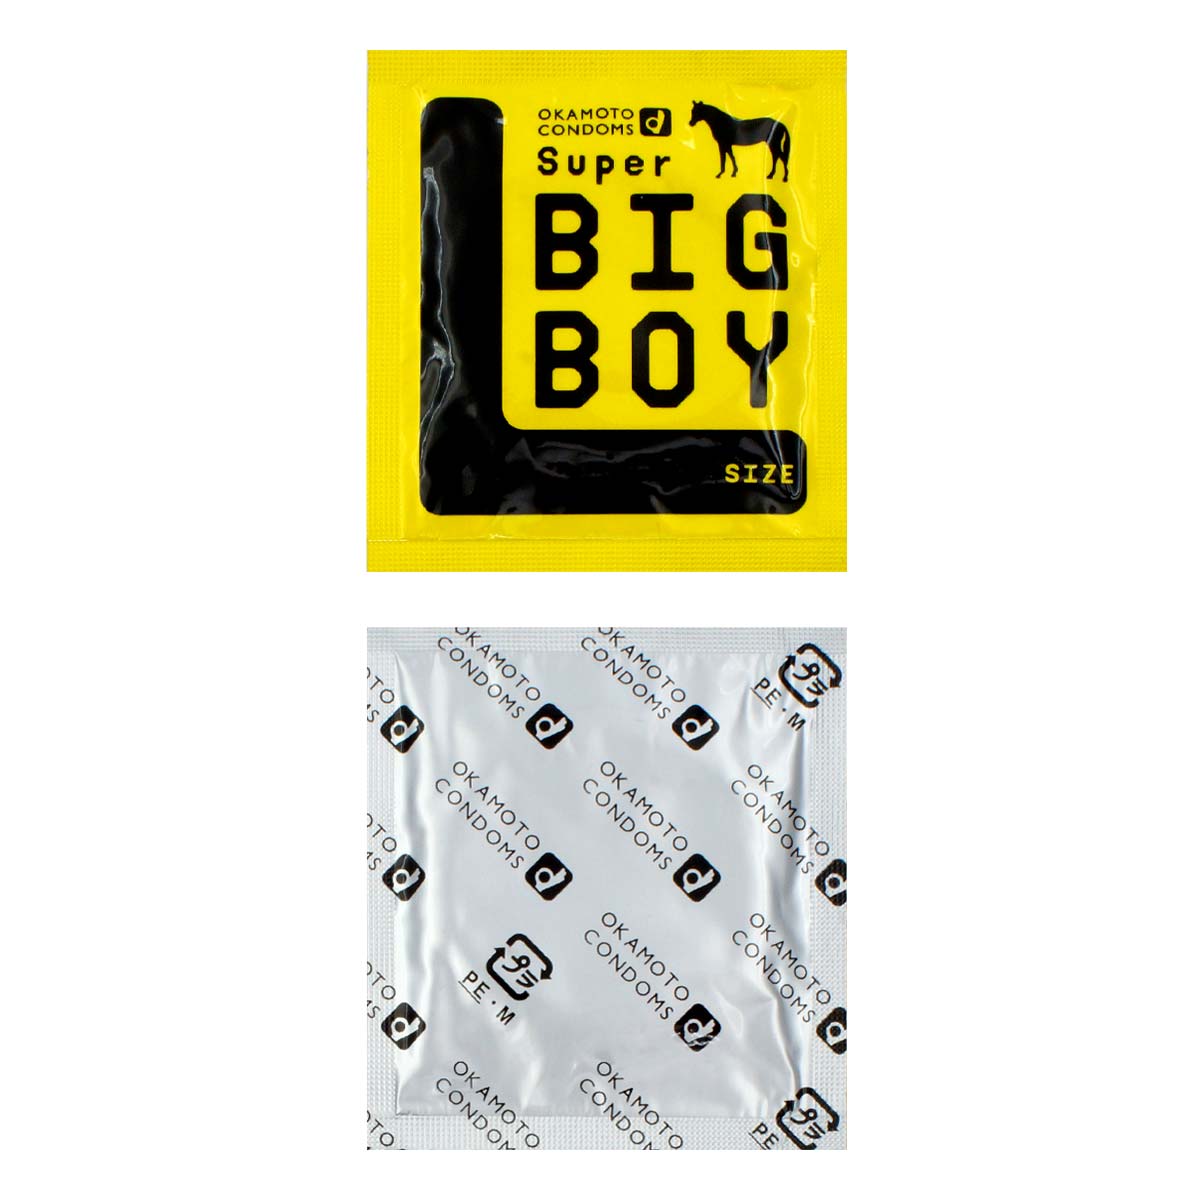 Super Big Boy 58mm (日本版) 2 片散裝 乳膠安全套-p_2